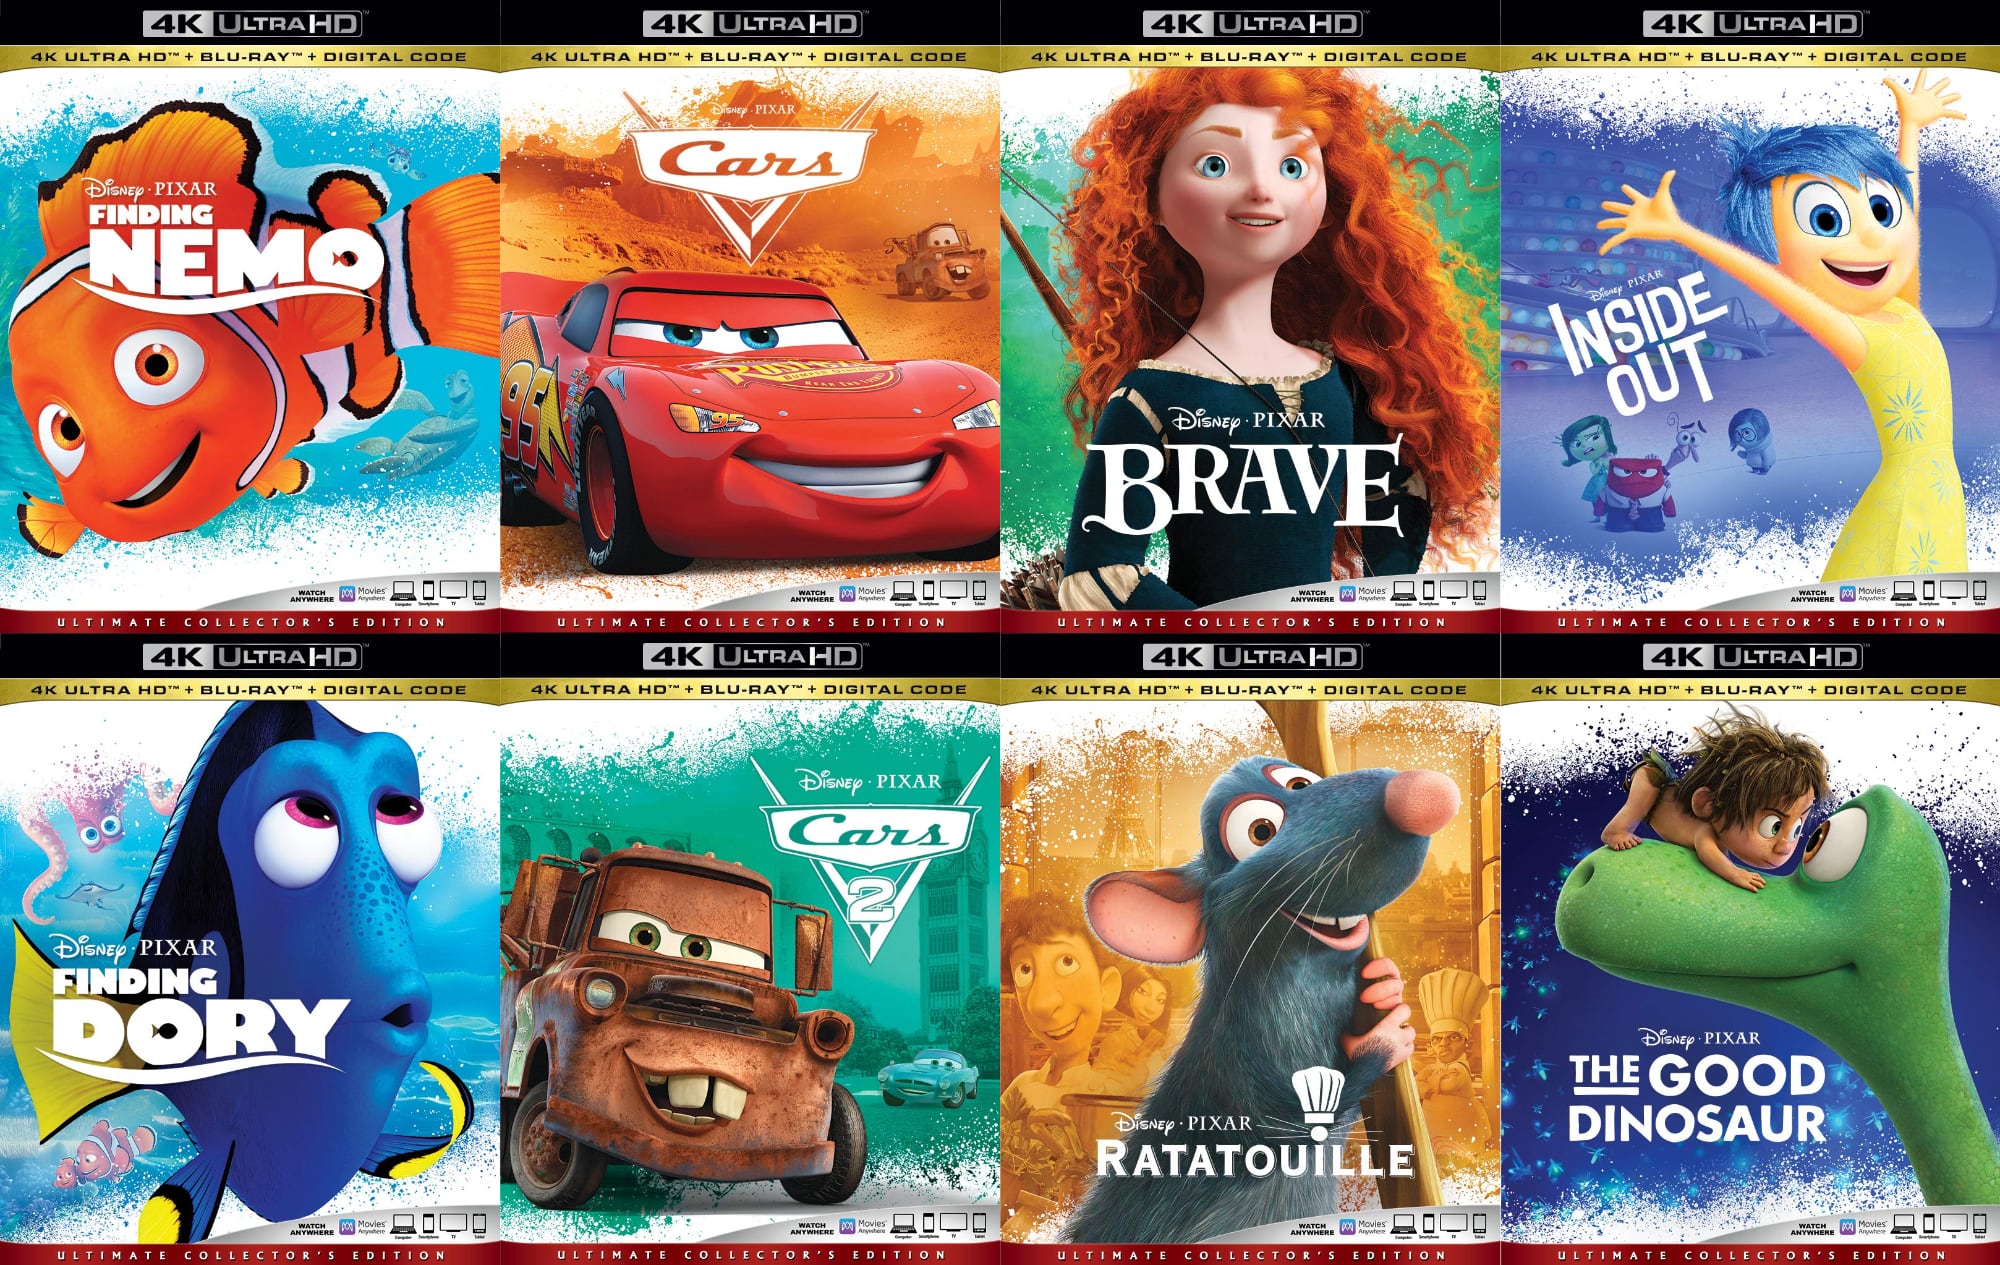 Incoming: Wave of Disney animation & Pixar movies on Ultra HD Blu